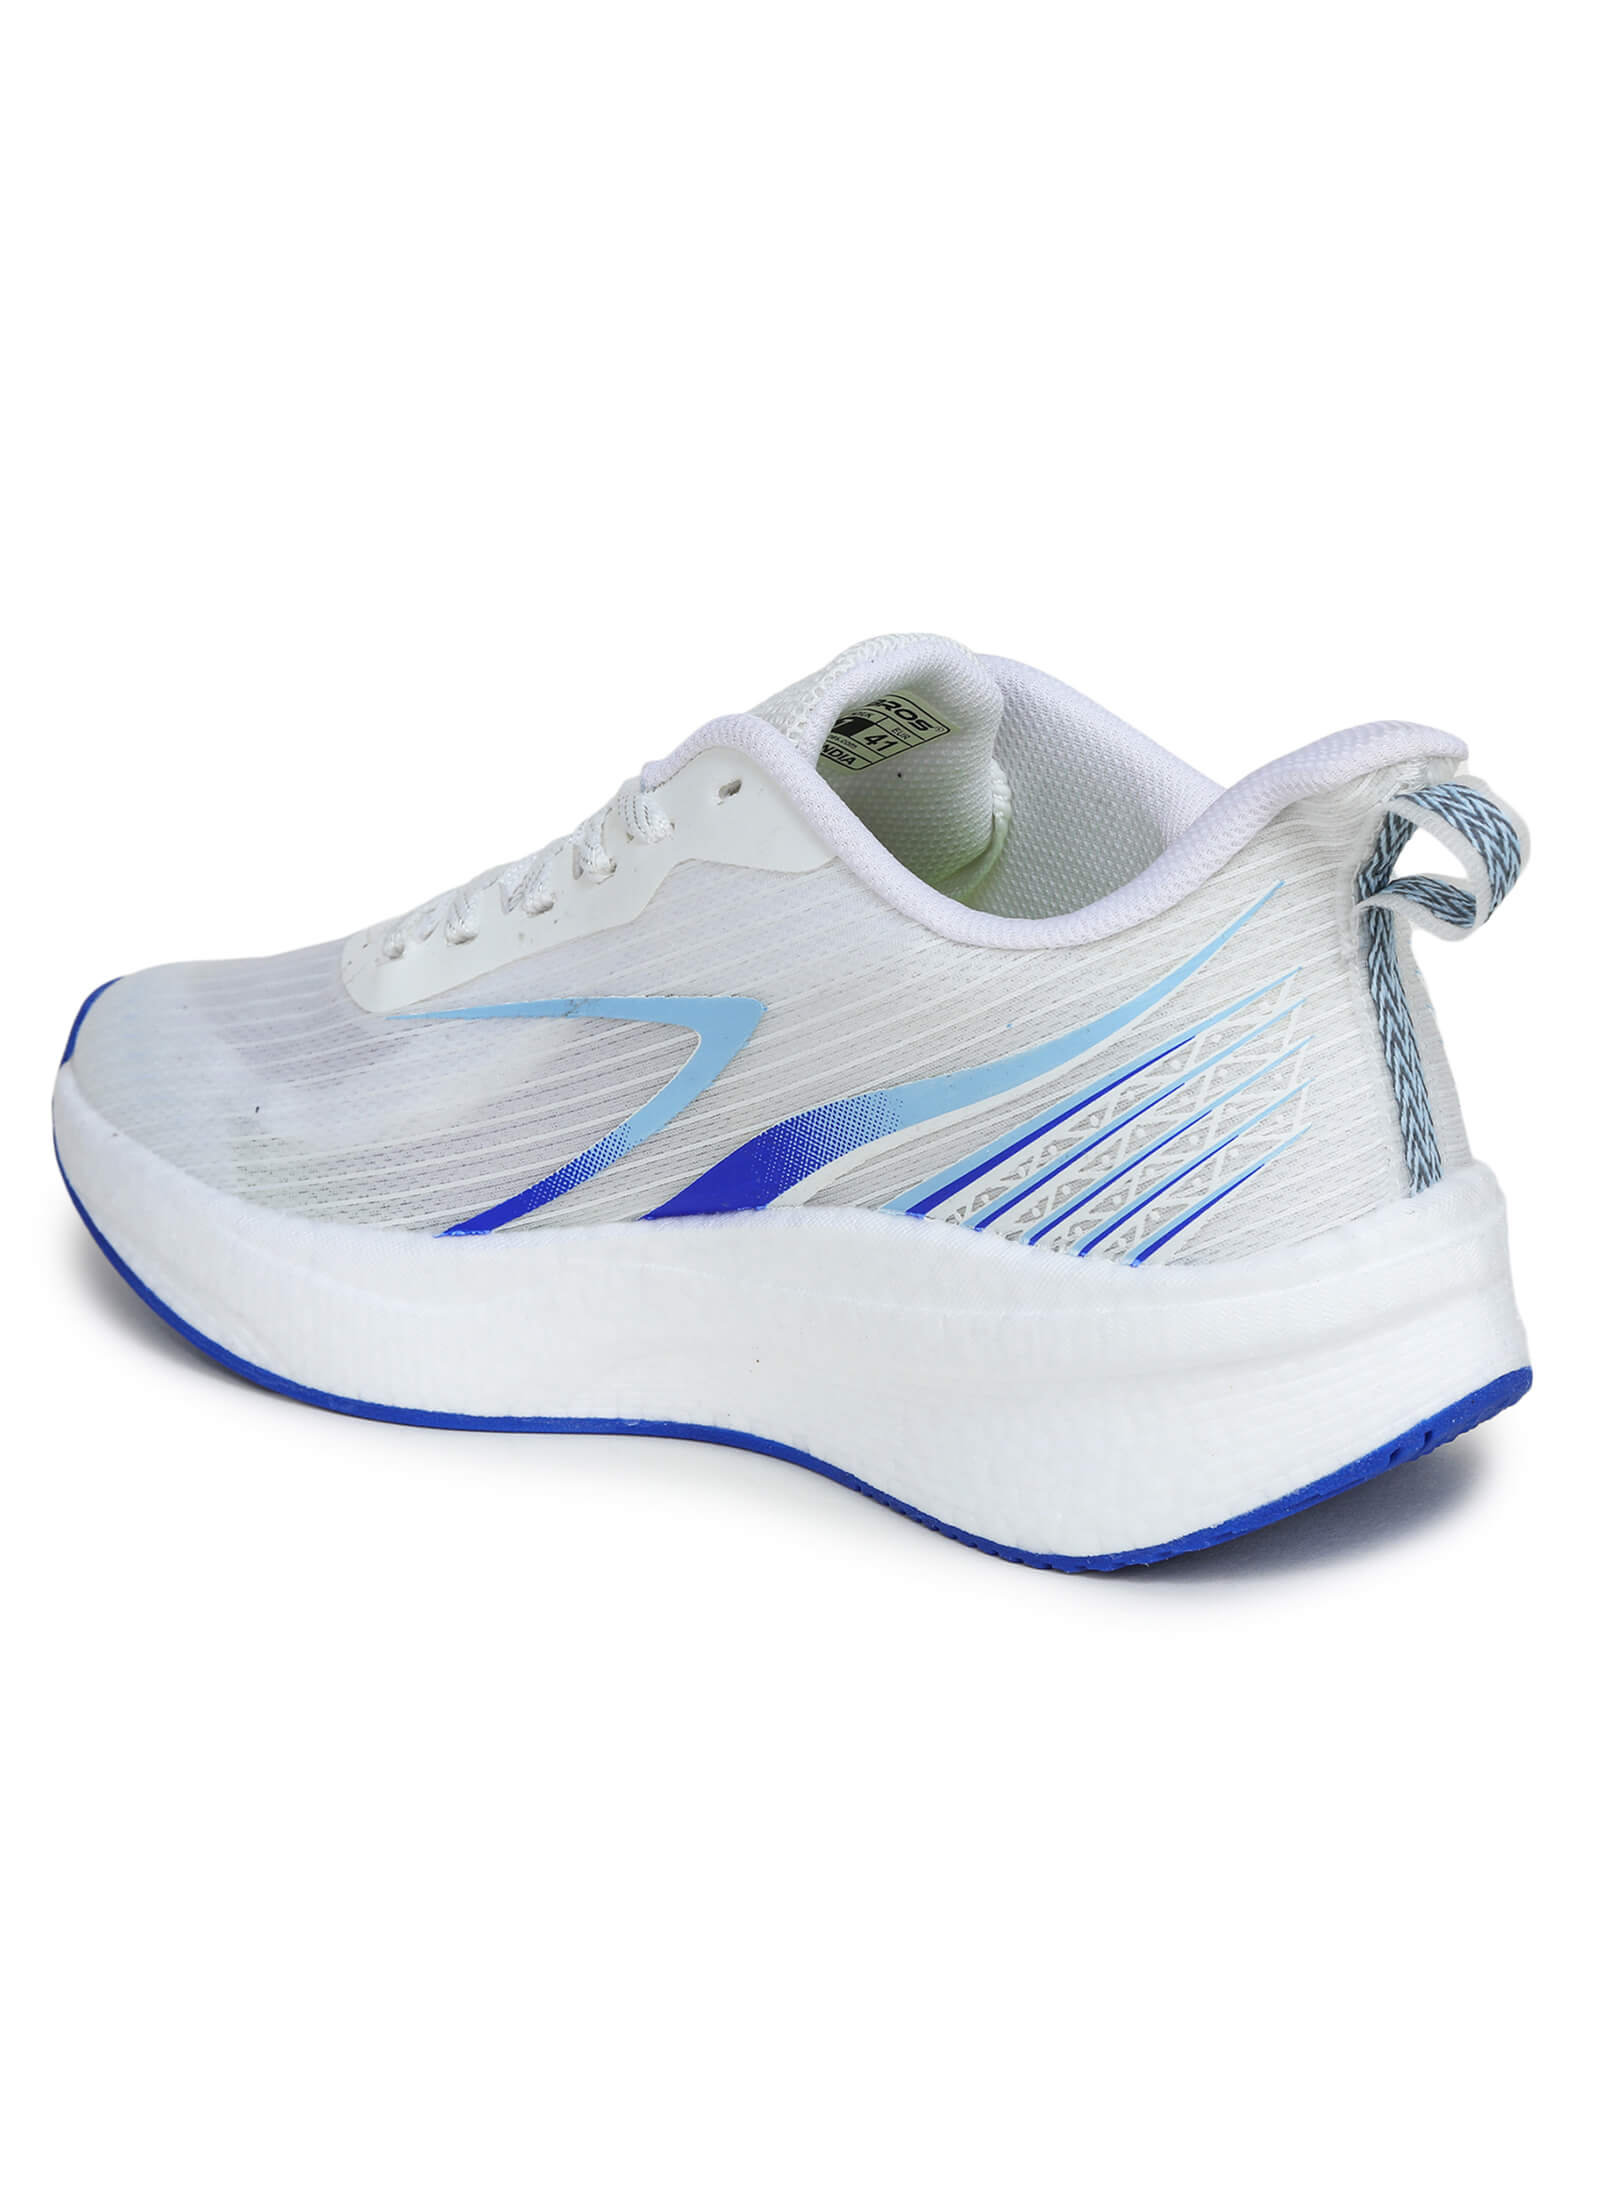 Laser Lightweight Anti-Skid Sports Shoes for Men